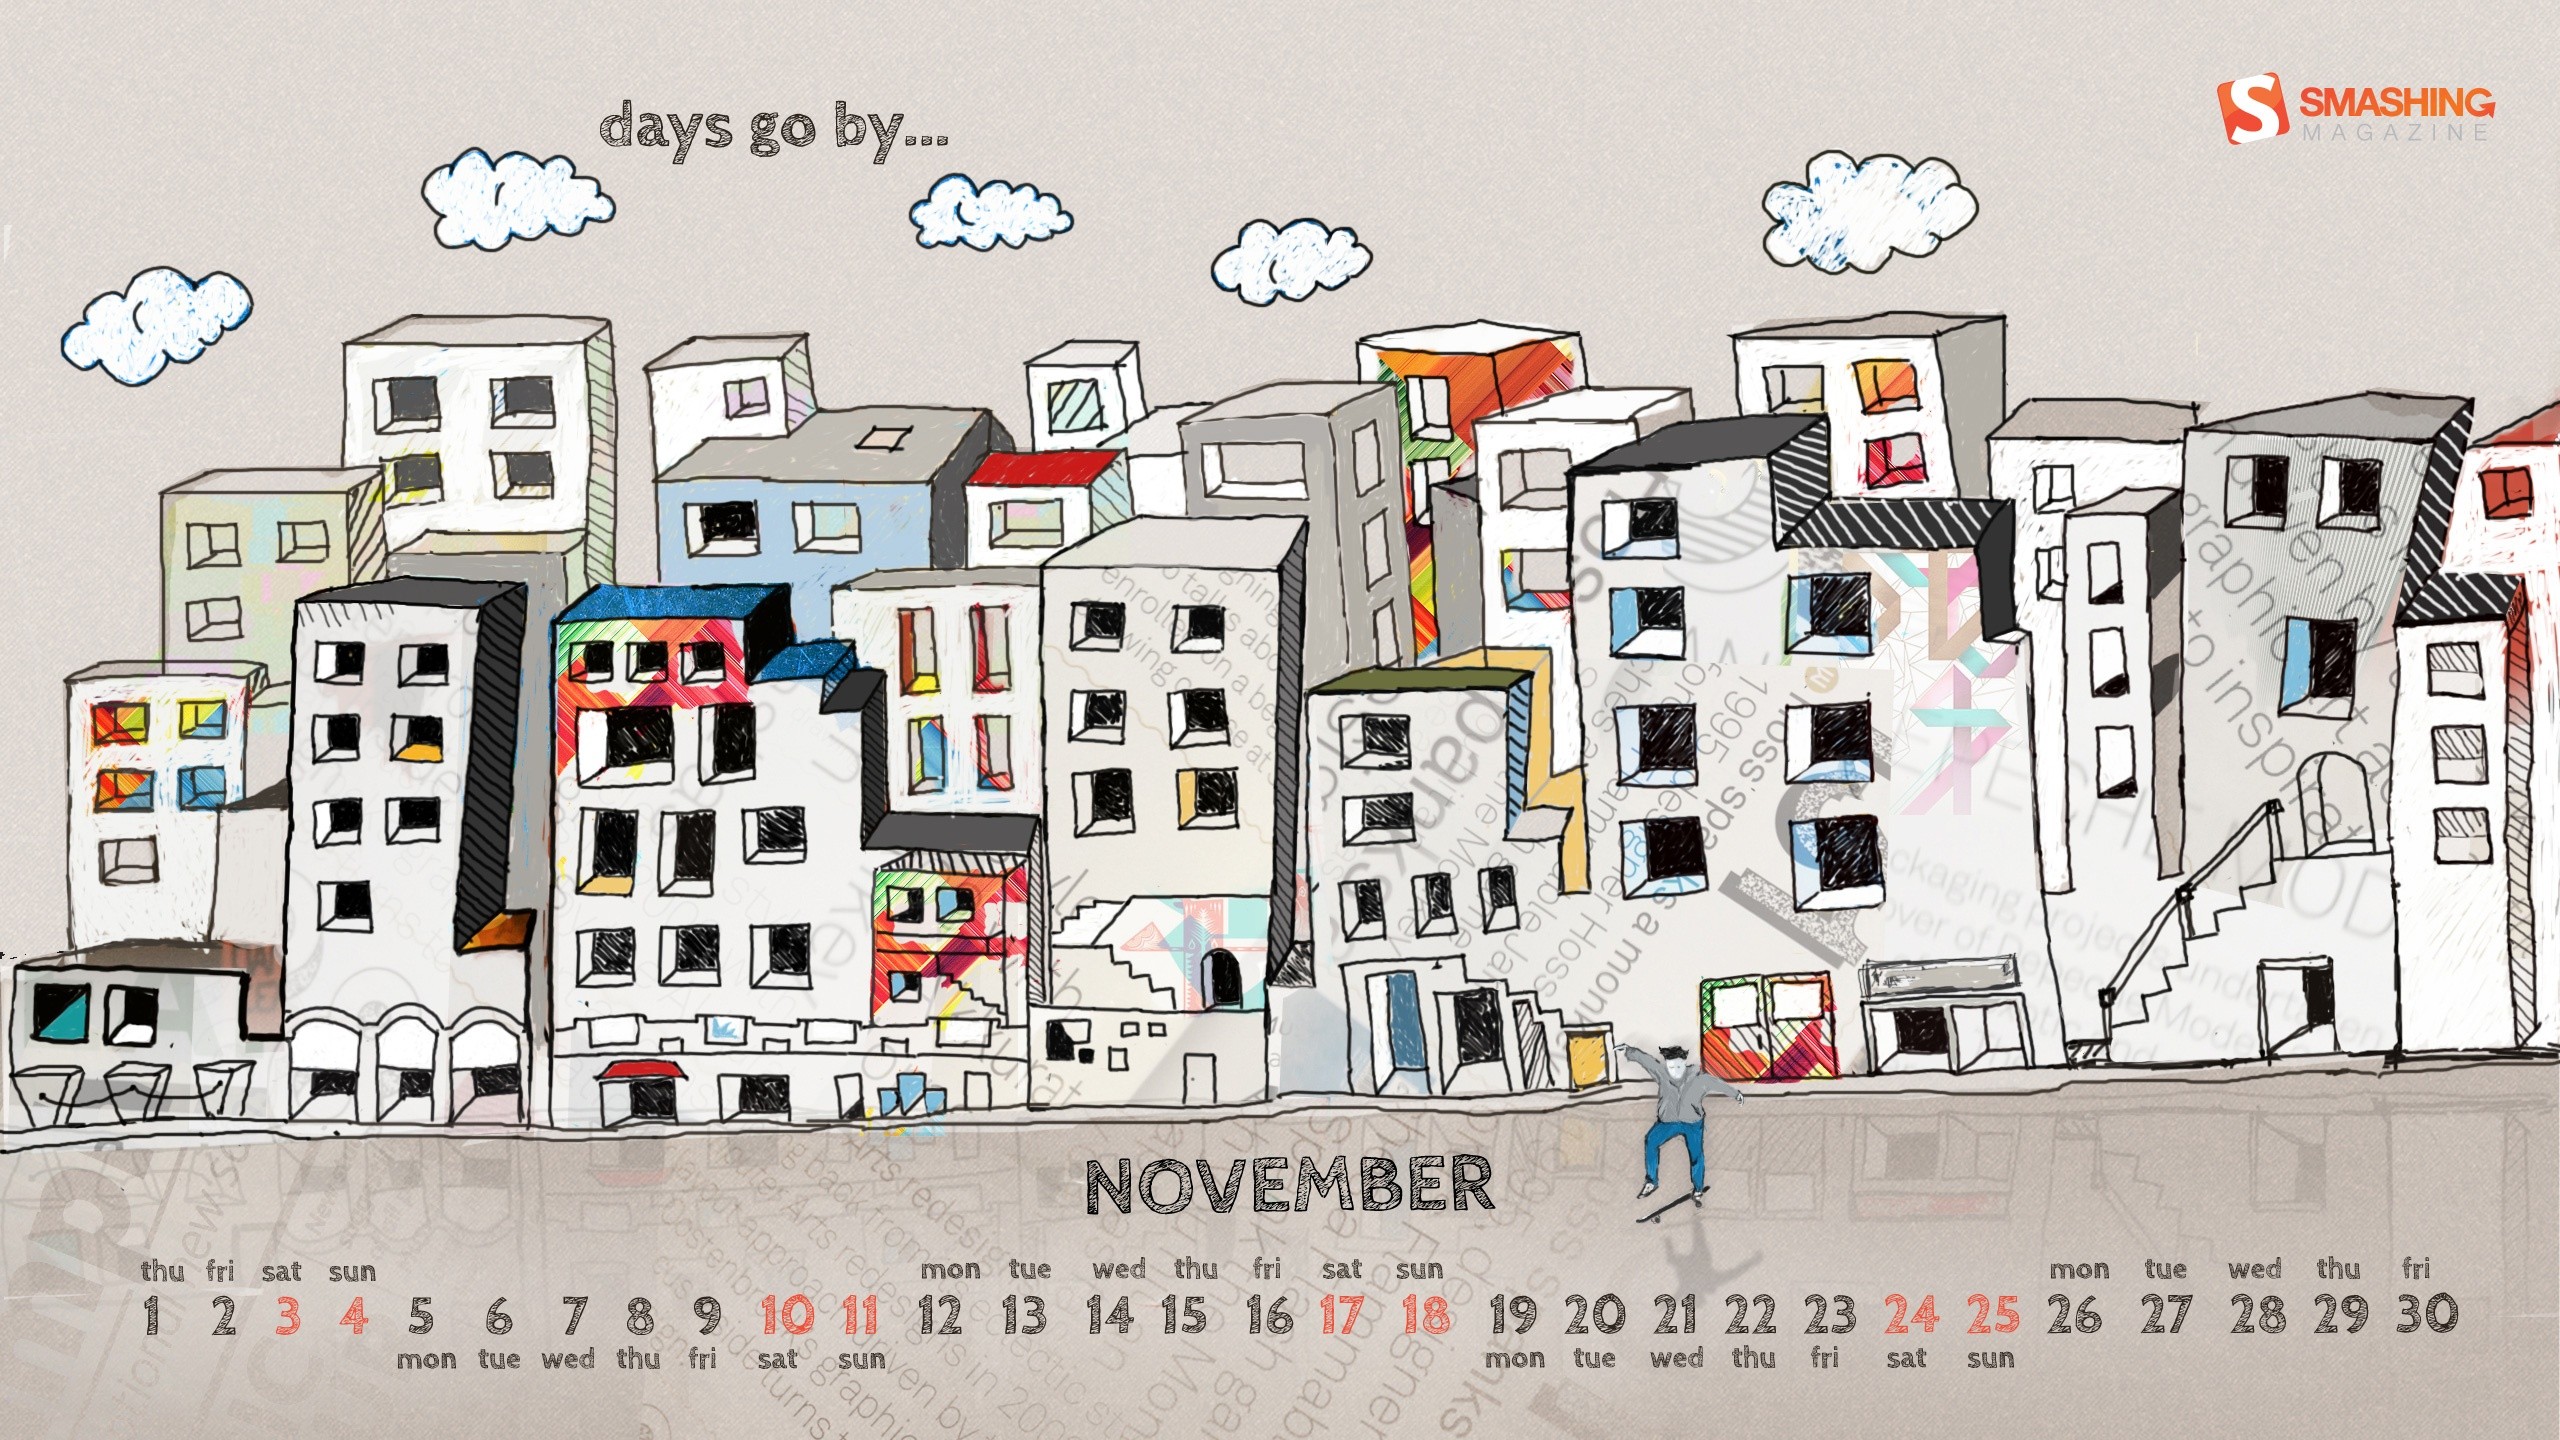 clouds, Text, Buildings, Skateboarding, November, Calendar, Artwork, Drawings, Smashing, Magazine Wallpaper